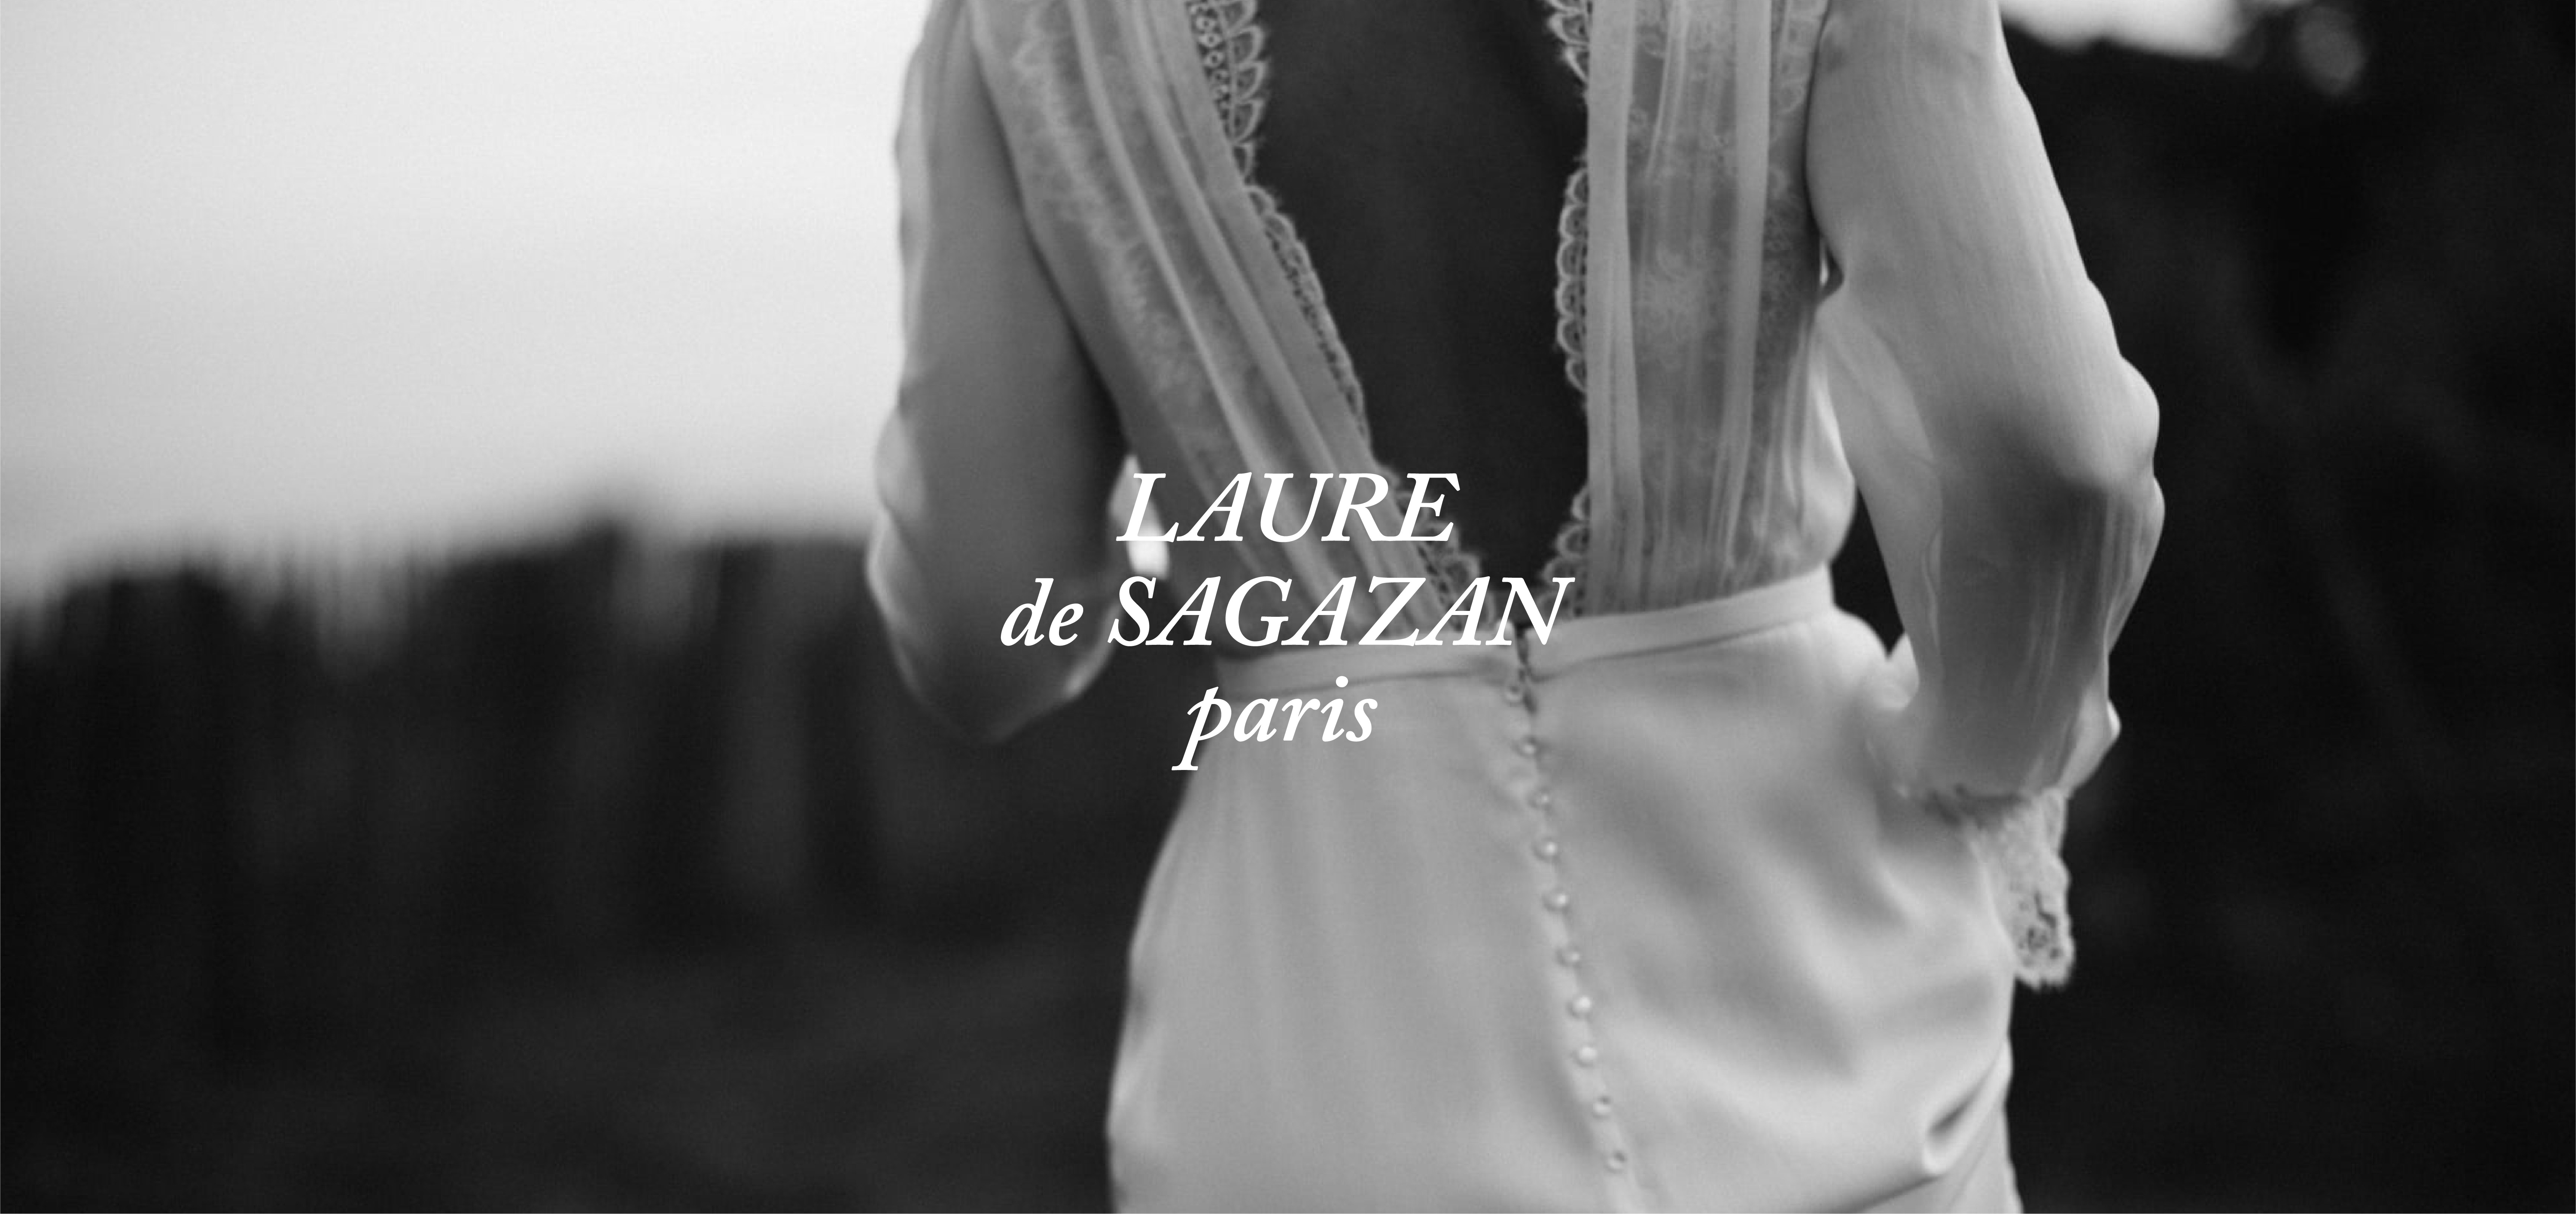 Laure de Sagazan 2667 - Nash and Young